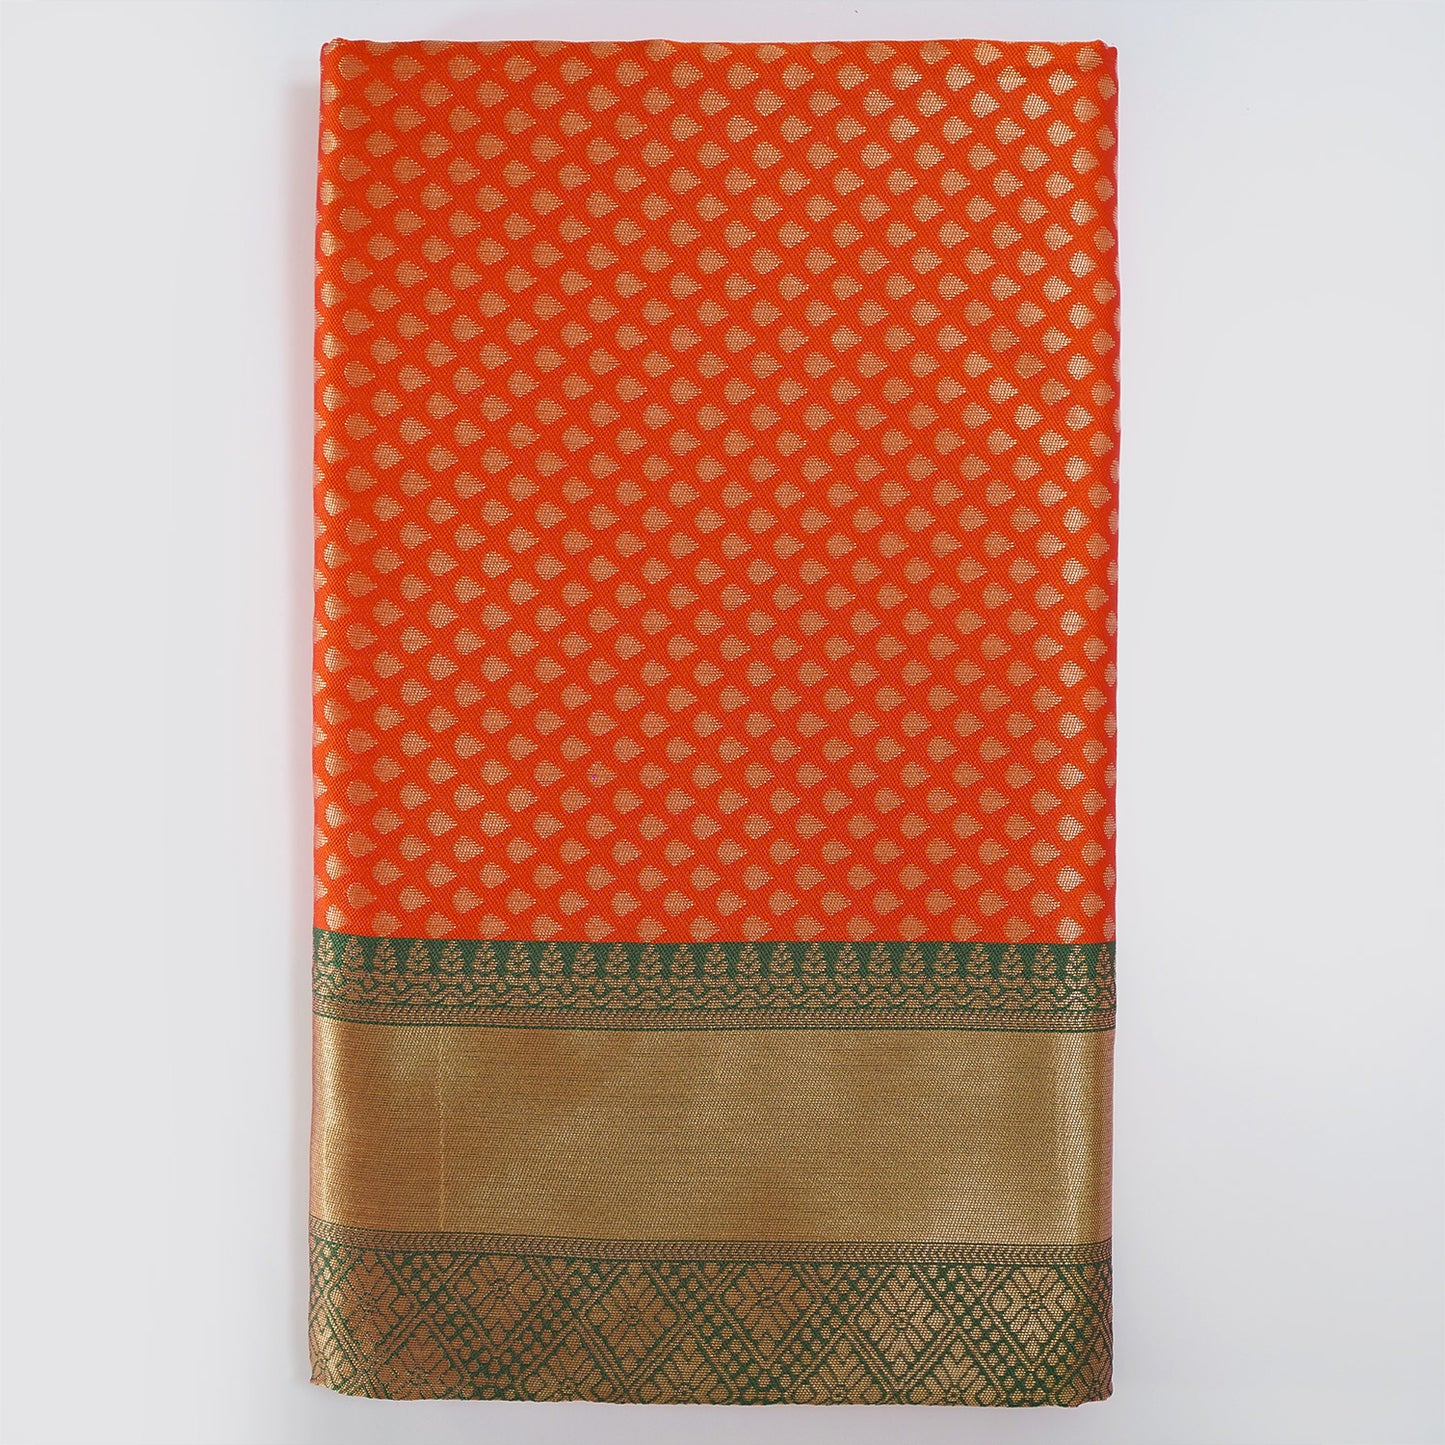 Silk Saree, Zari Butti Design, Traditional Indian Attire, Wedding Saree, Festive Wear, Elegant Ethnic Wear, Handcrafted Silk, Bloomaya Sarees, Premium Quality Fabric, Exclusive Saree Collection.